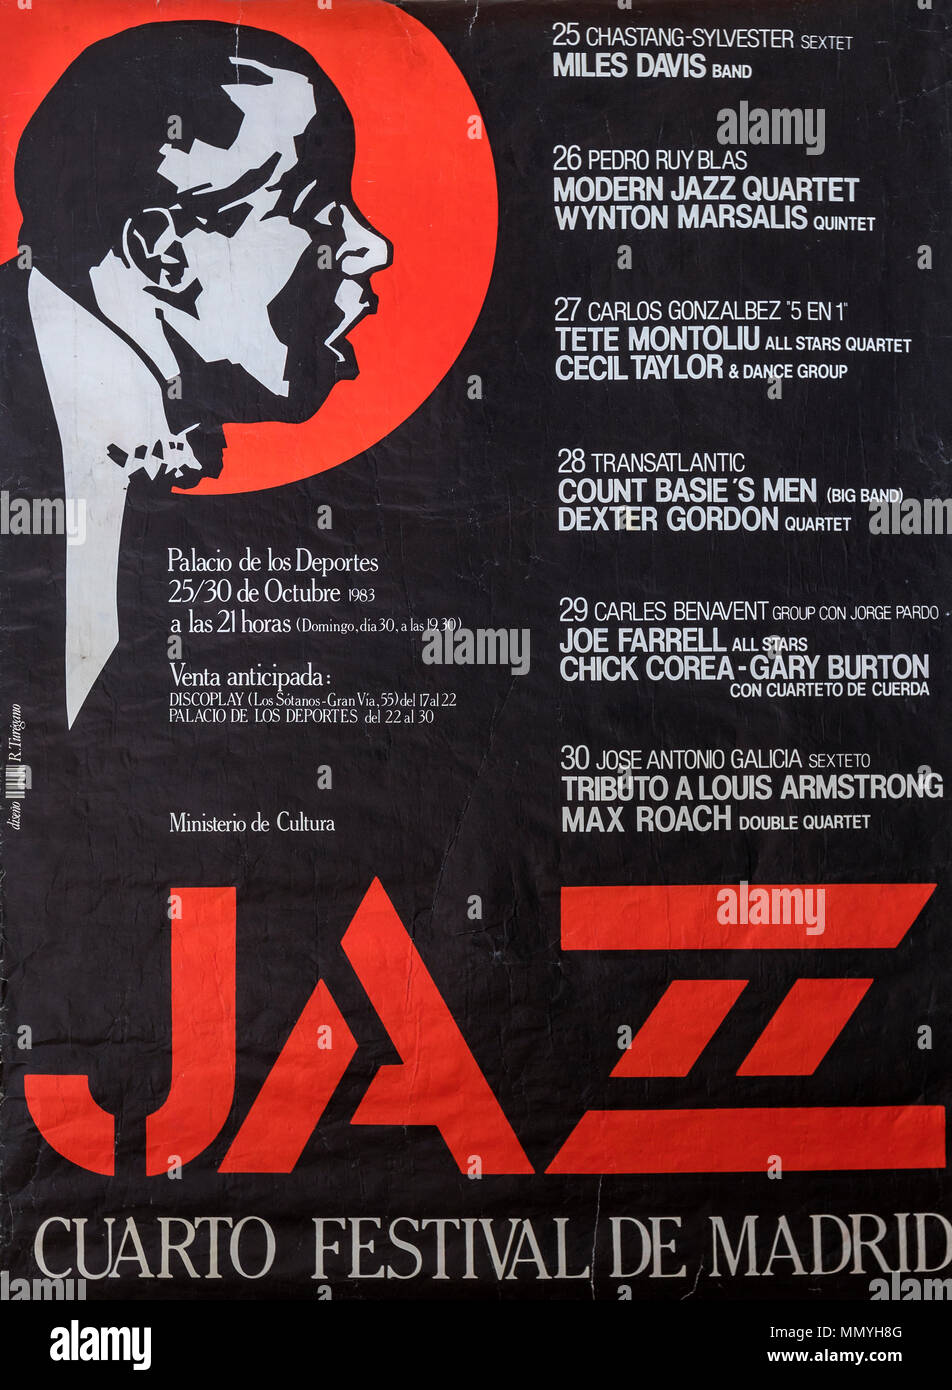 International Jazz Festival Madrid 1983, Miles Davis, Dexter Gordon, Tete Montoliu, Wynton Marsalis, Count Basie, Musical concert poster Stock Photo